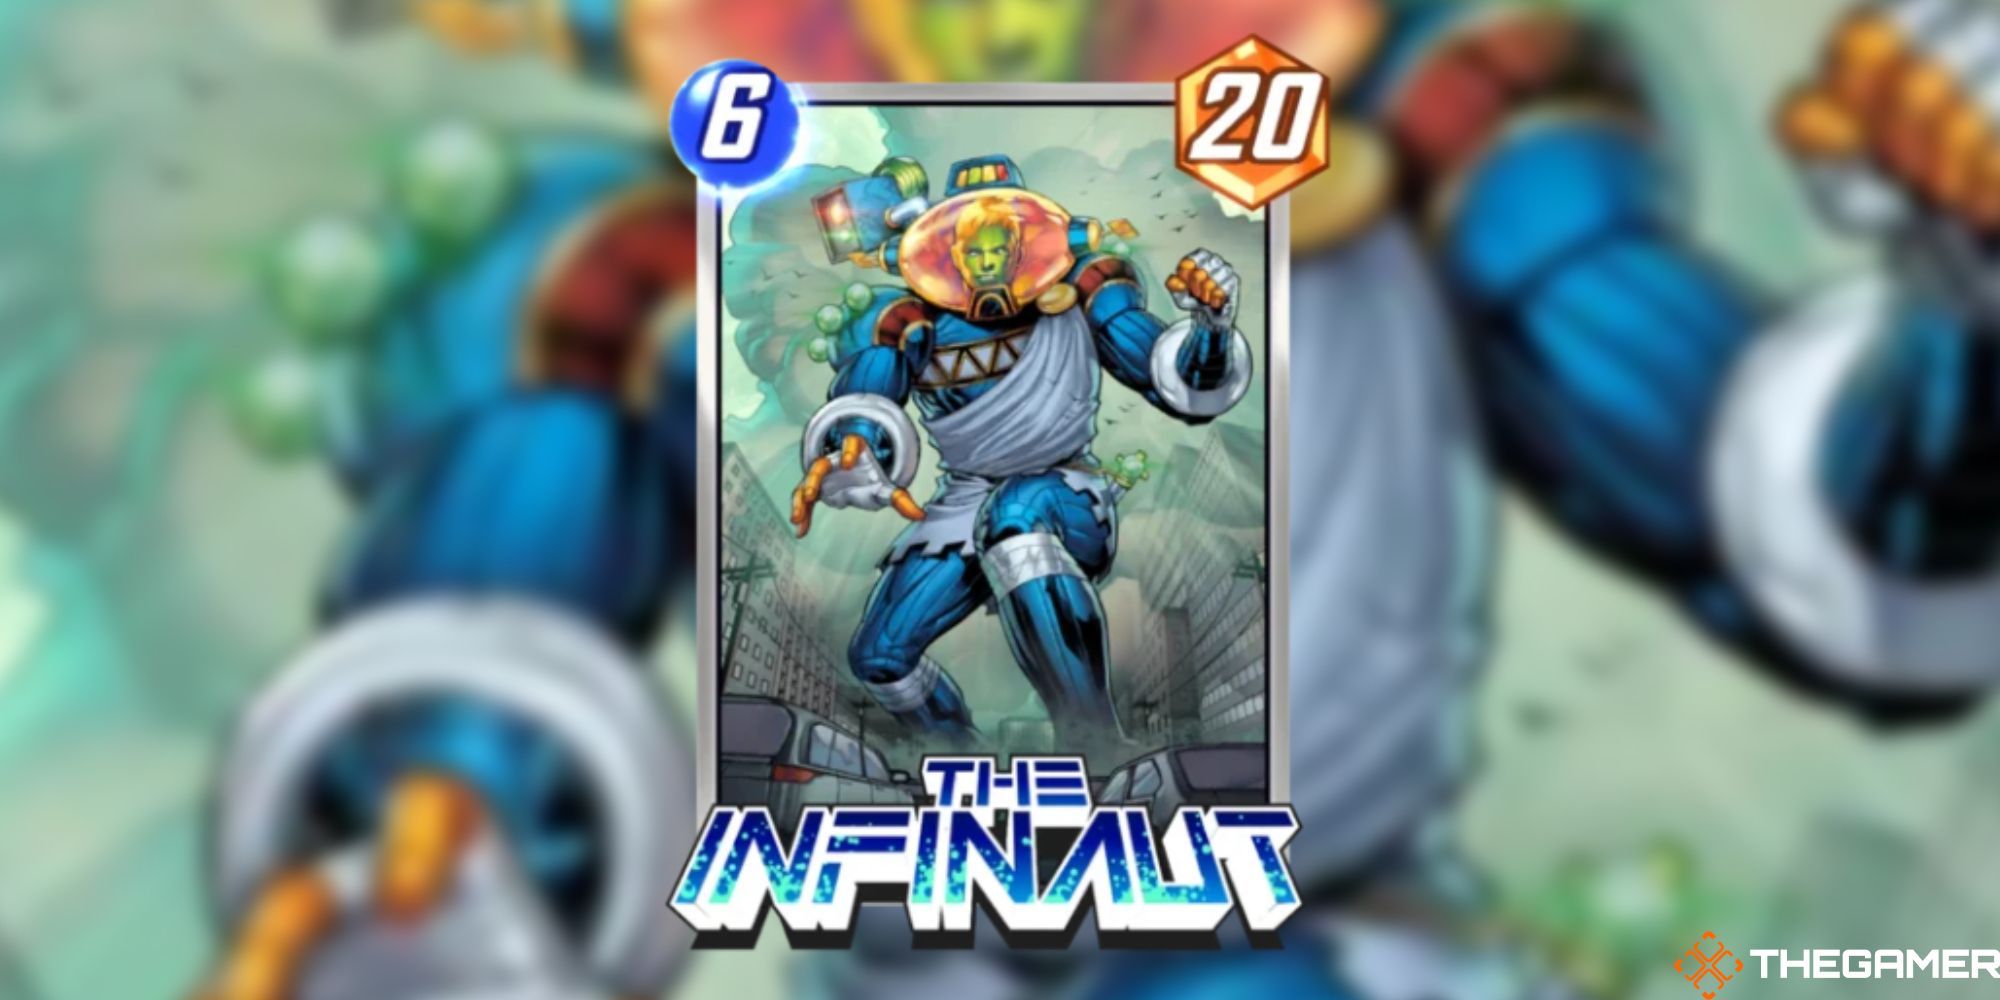 Marvel Snap The Infinaut free wins